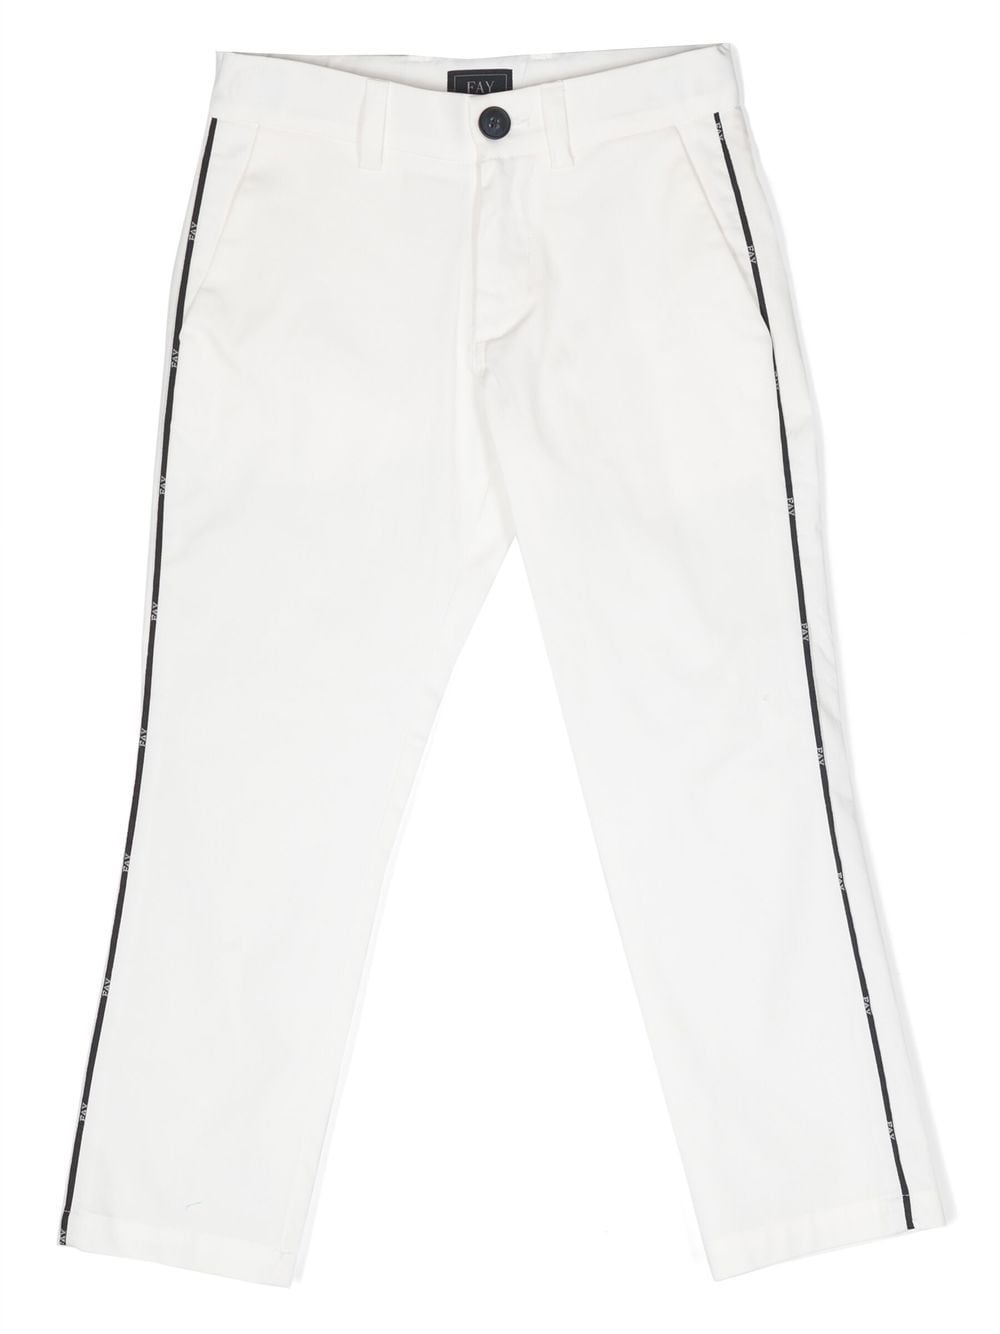 White trousers for children